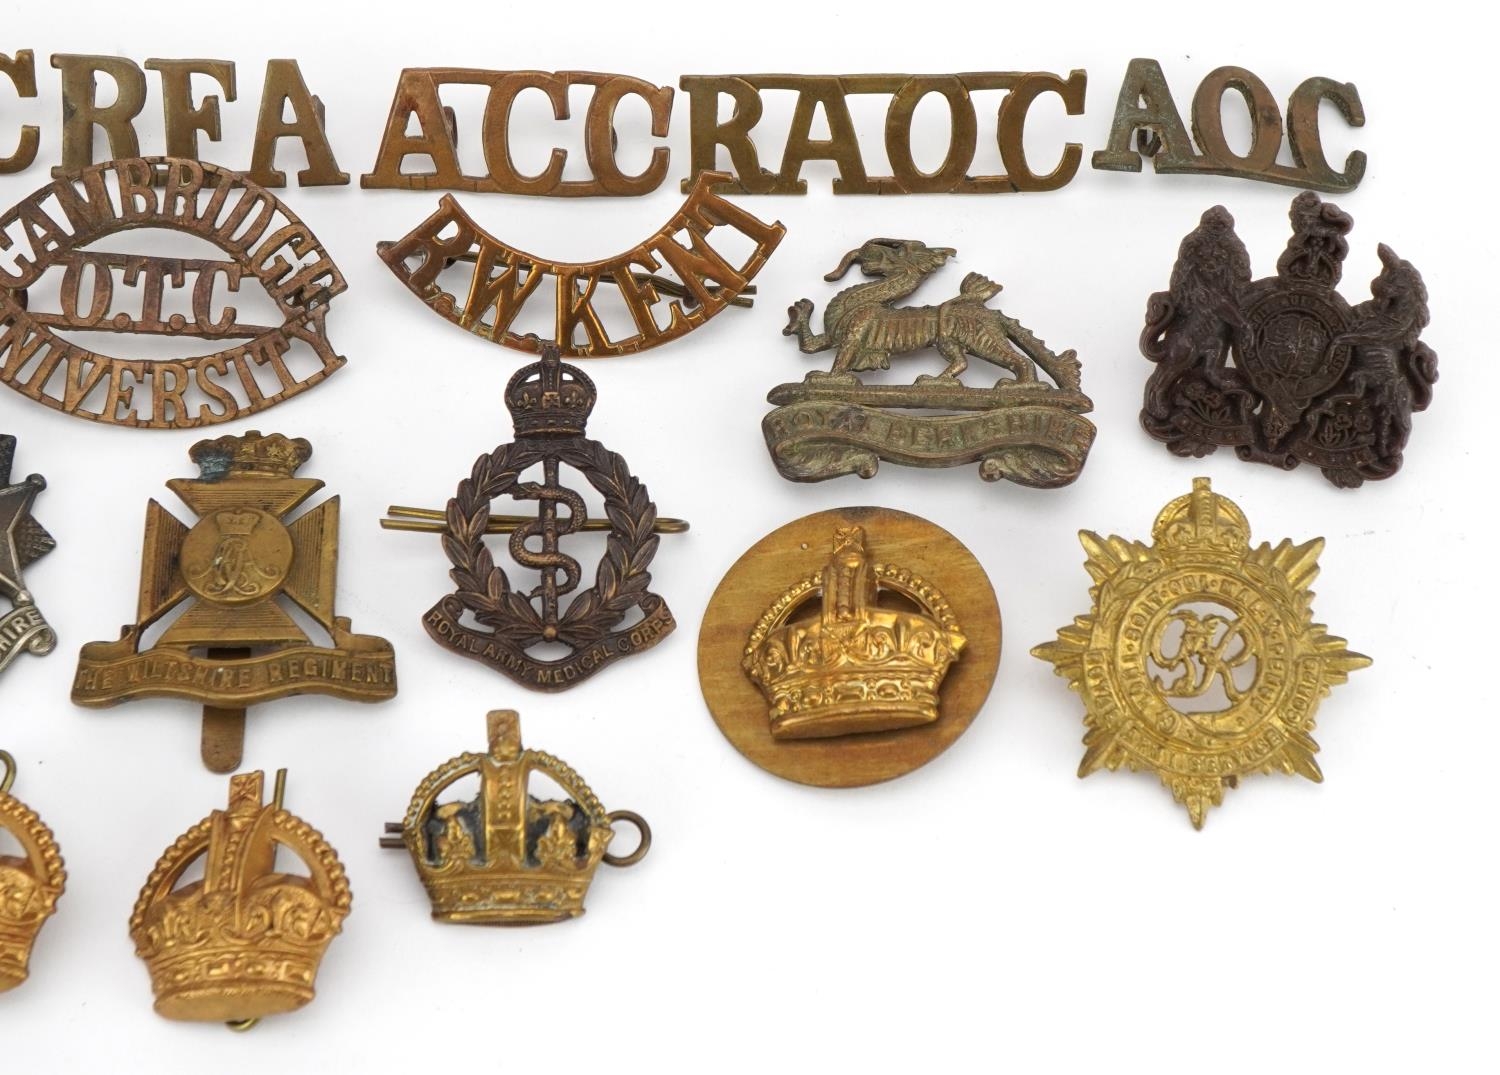 Military interest cap badges and shoulder titles including Royal Berkshire, Bedfordshire & - Image 3 of 4